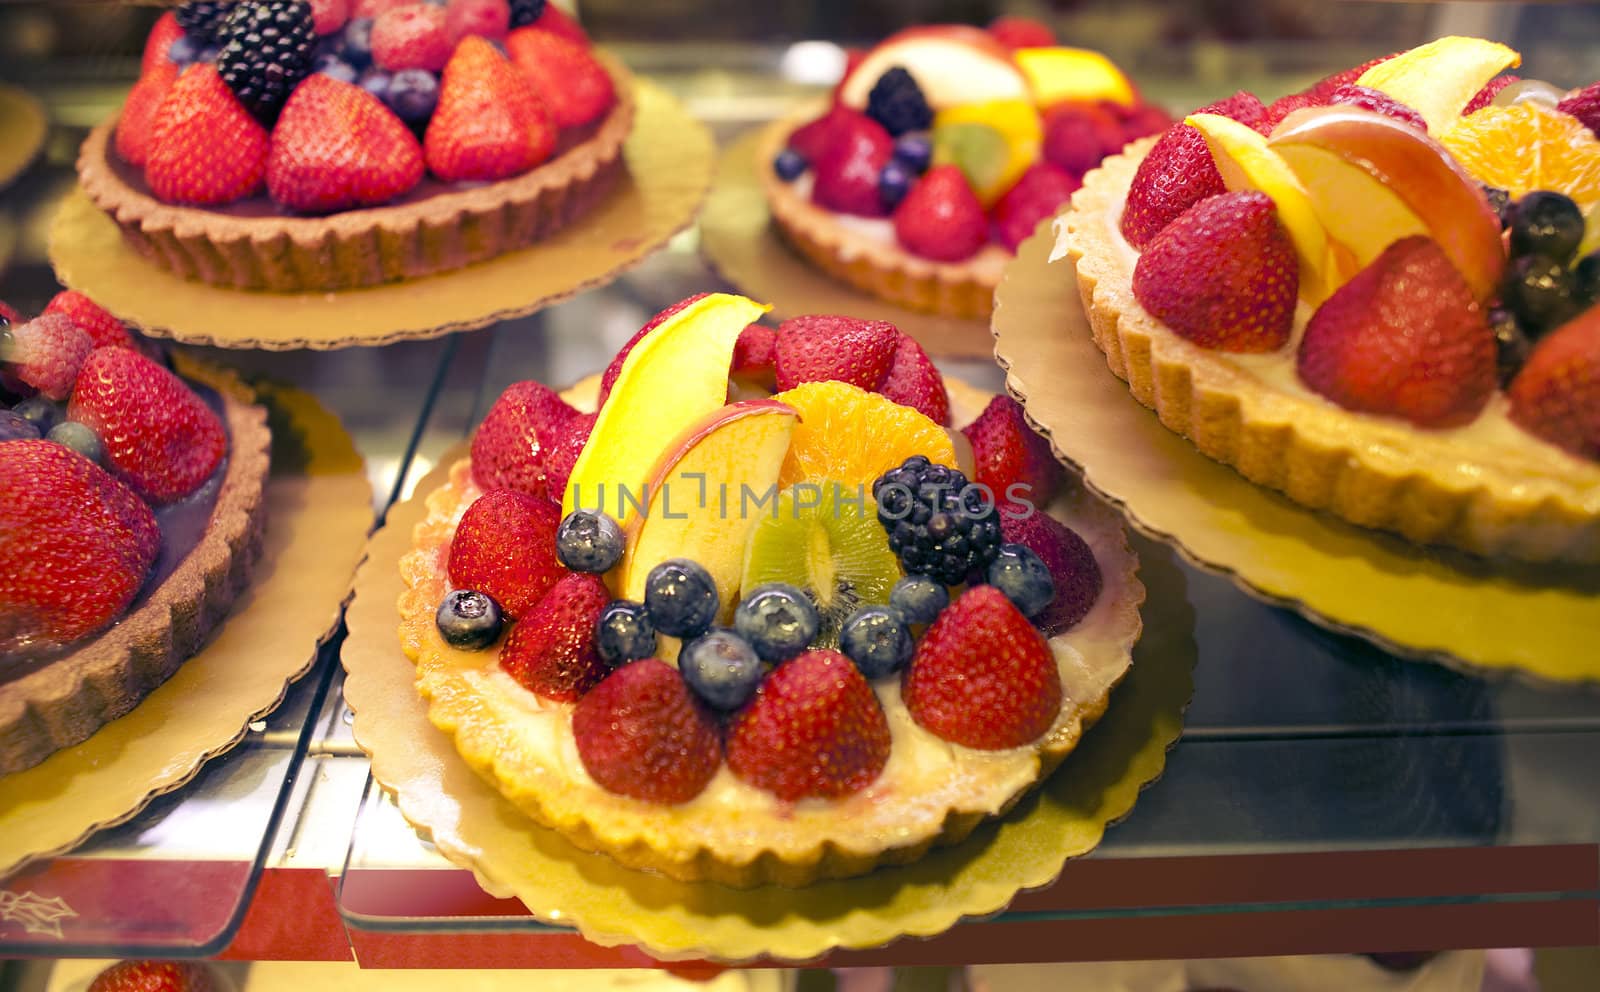 Mini strawberry tarts in bakery display